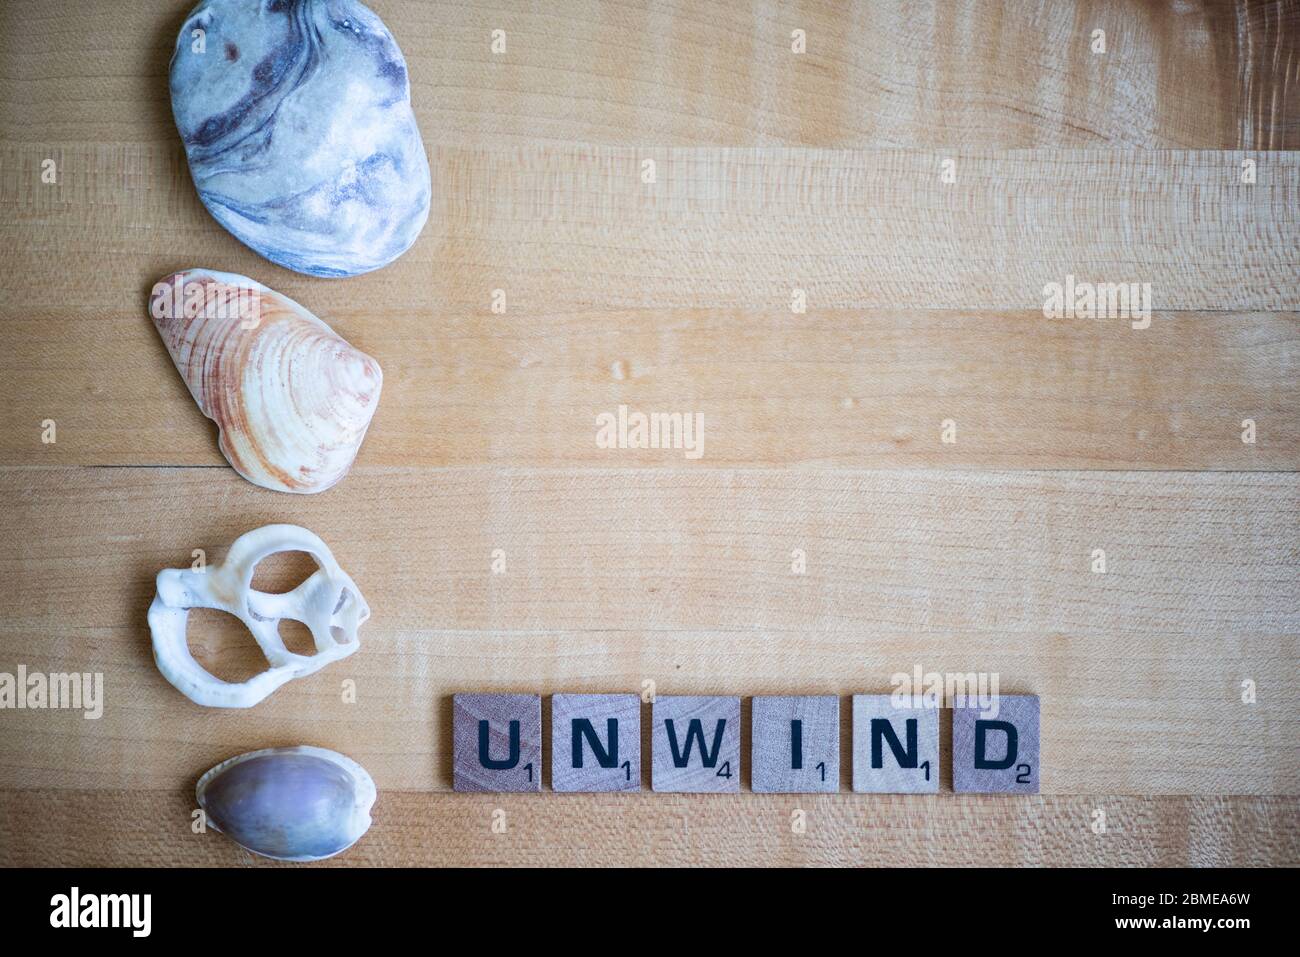 Unwind in block letters Stock Photo